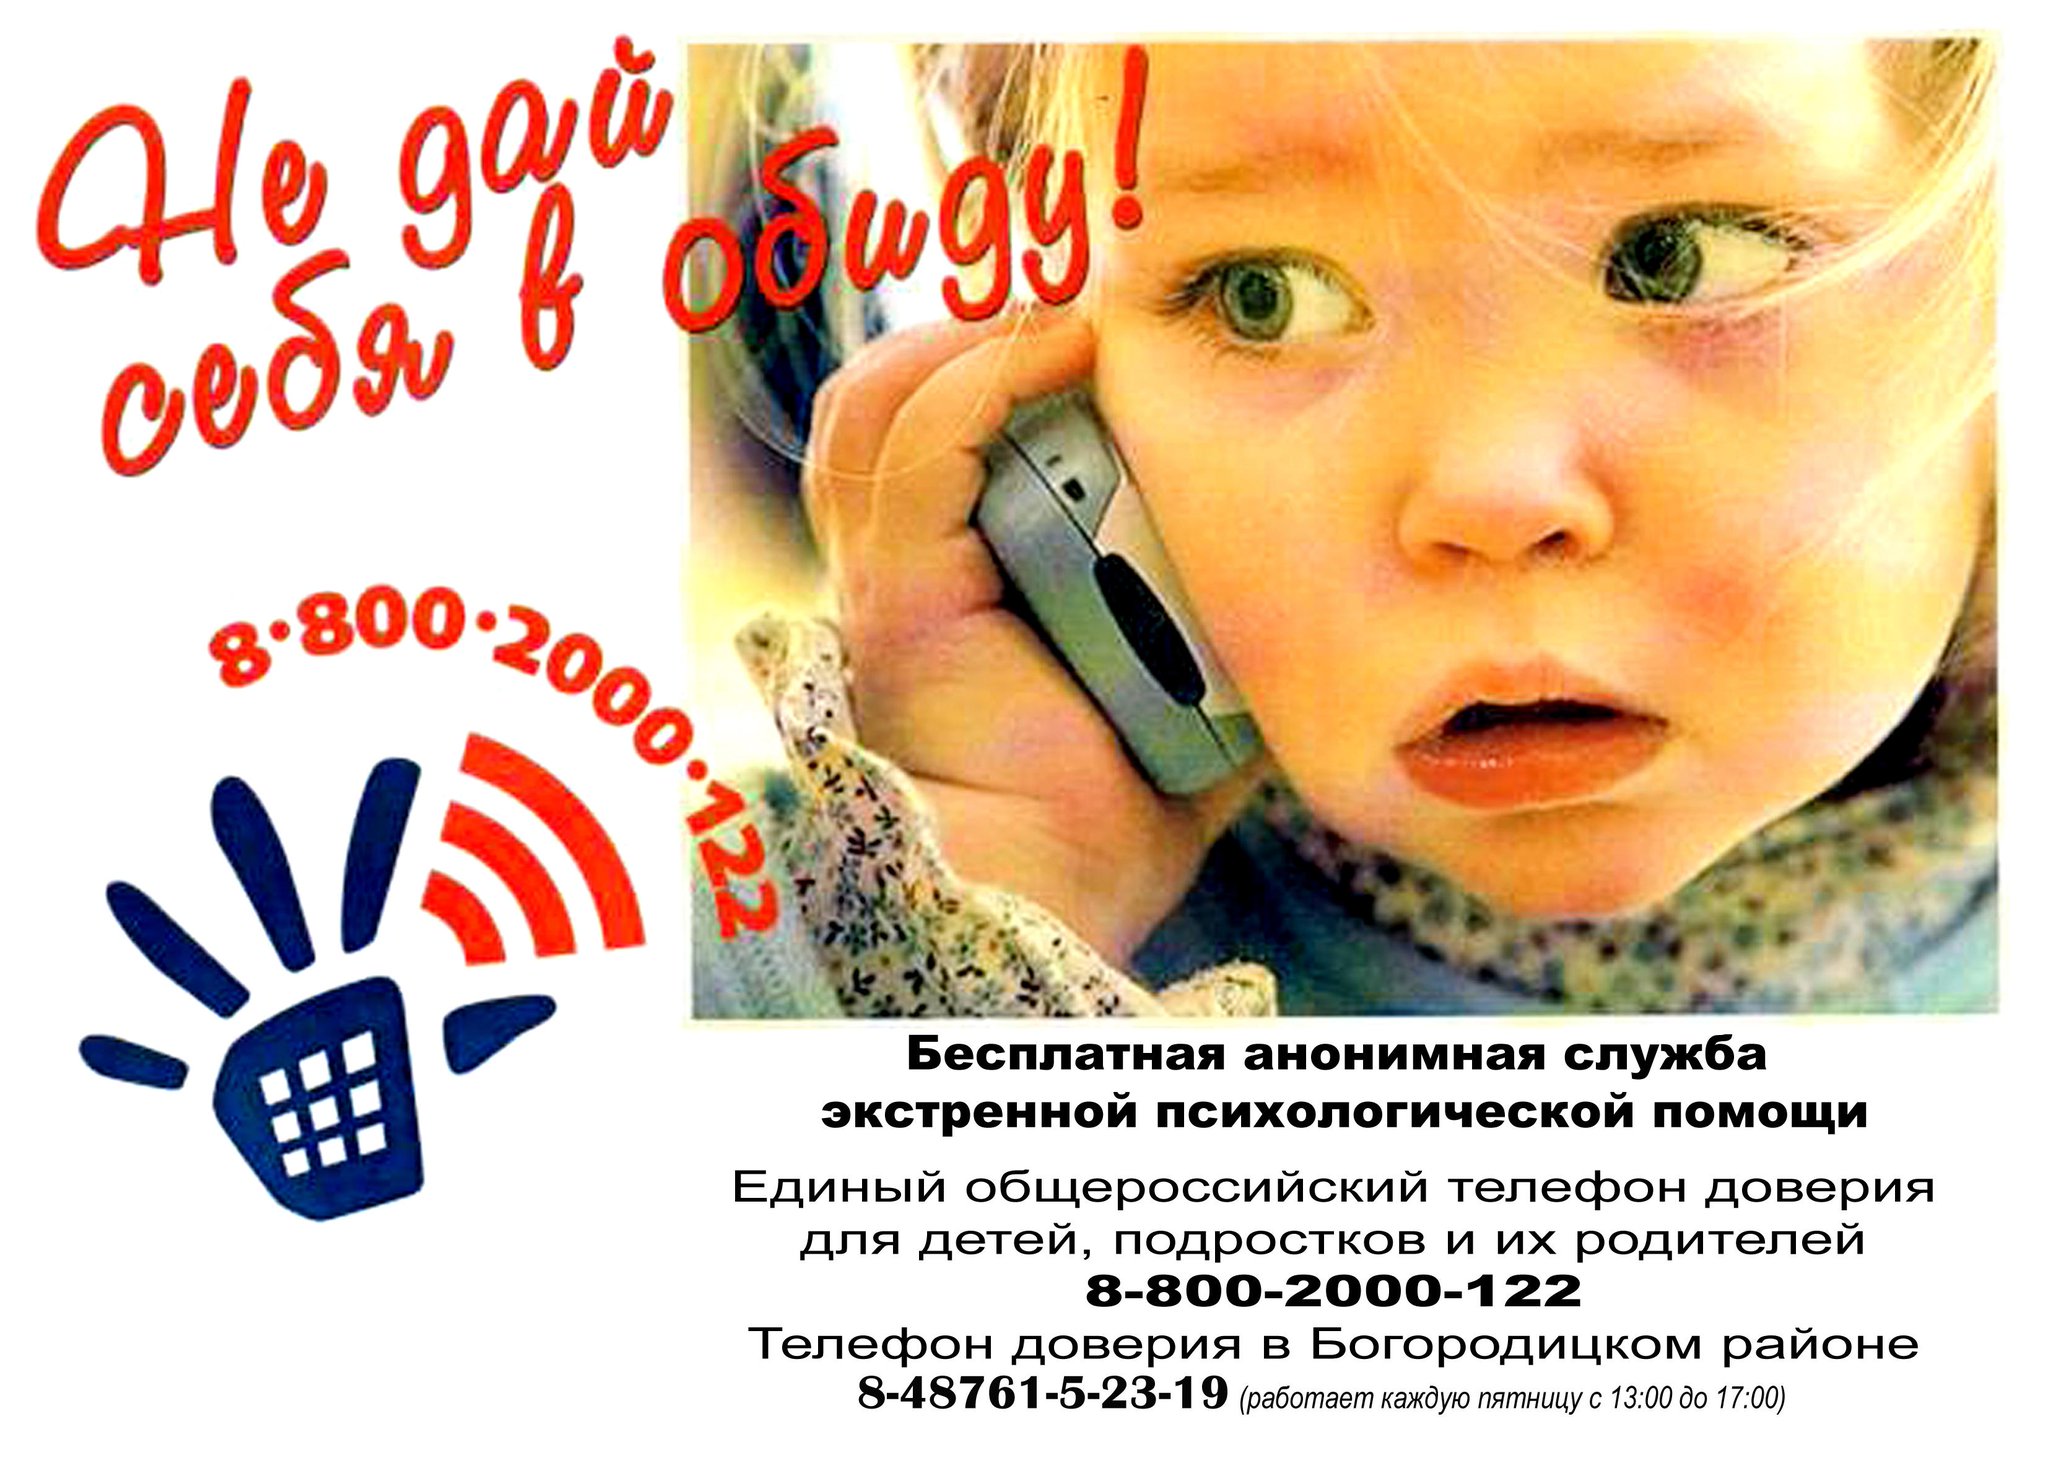 Звоним в телефон доверия. Единый детский телефон доверия 8-800-2000-122. Телефон доверия. Телефон доверия для детей. Детские телефоны доверия.